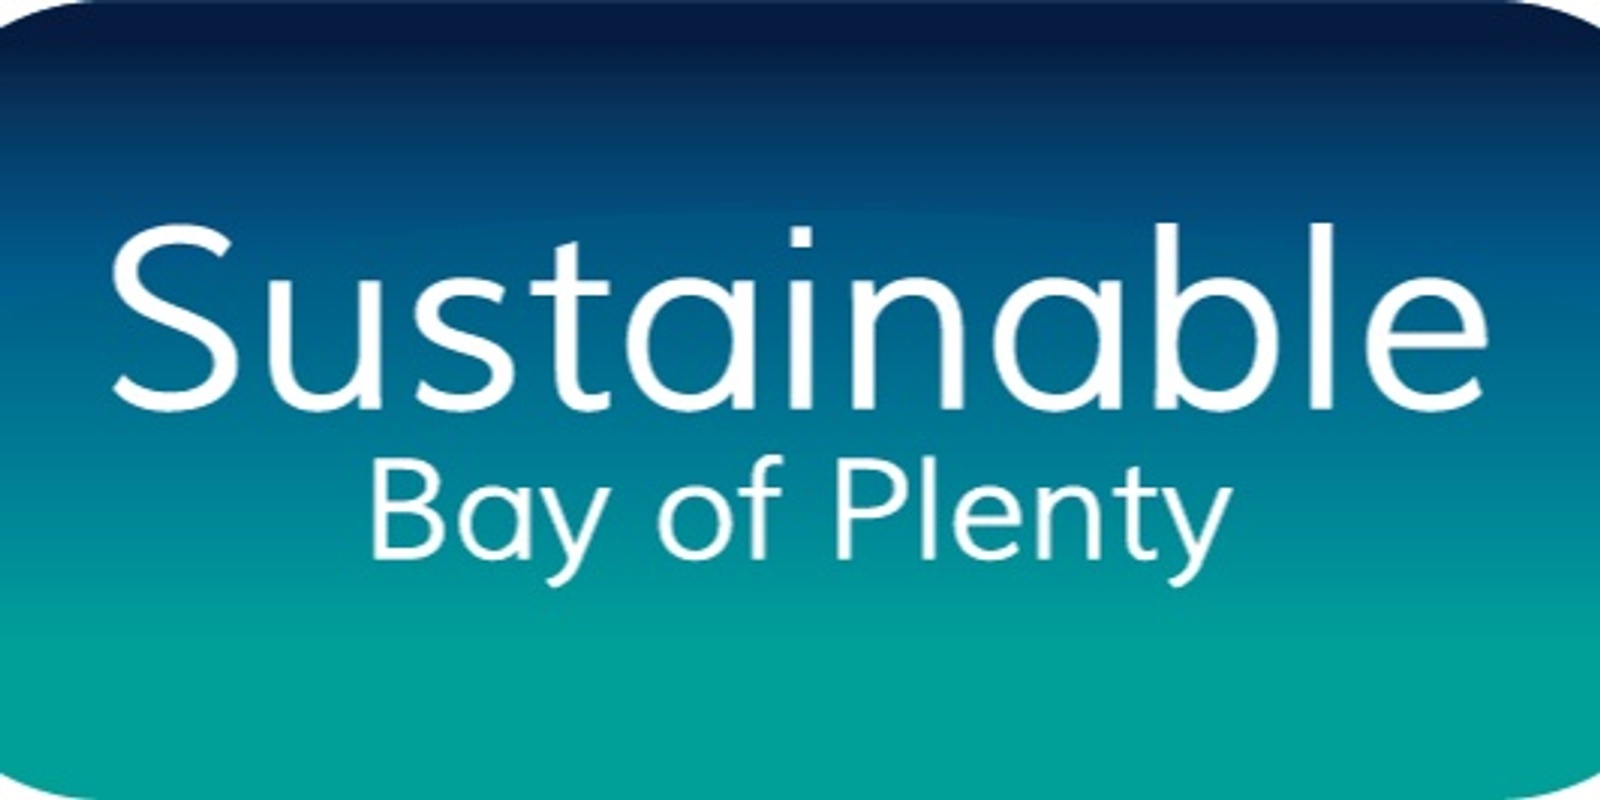 Sustainable Bay of Plenty's banner